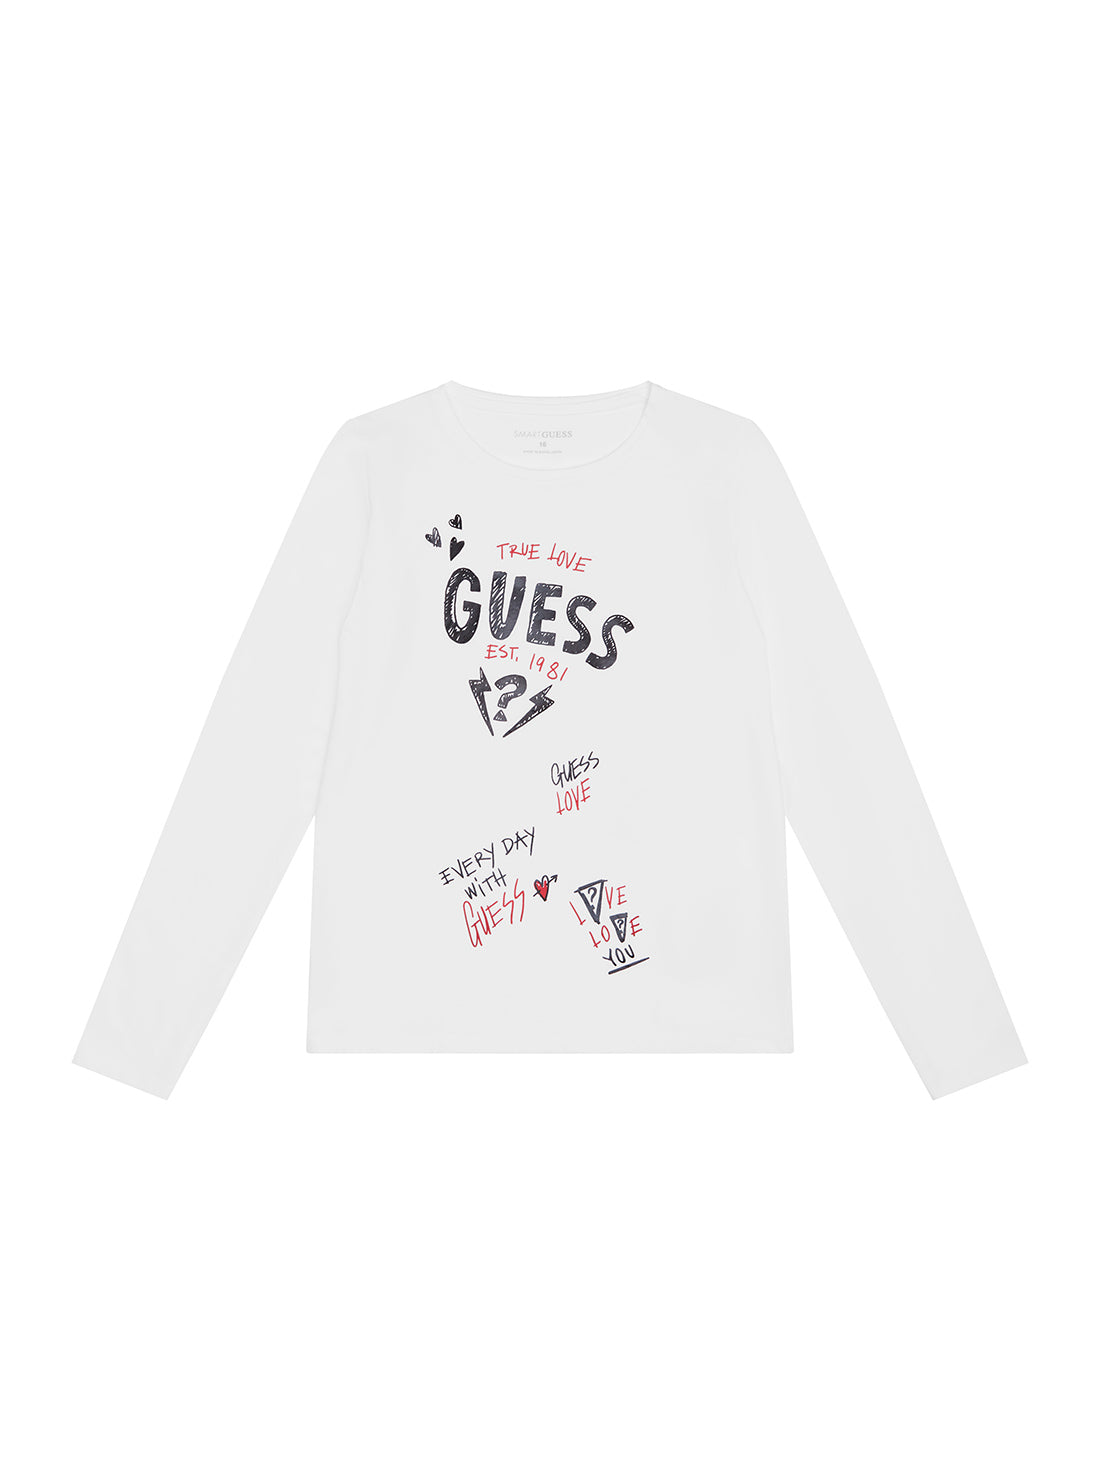 GUESS Kids Girls White True Love T-Shirt (7-16)    J1BI02J1311 Front View